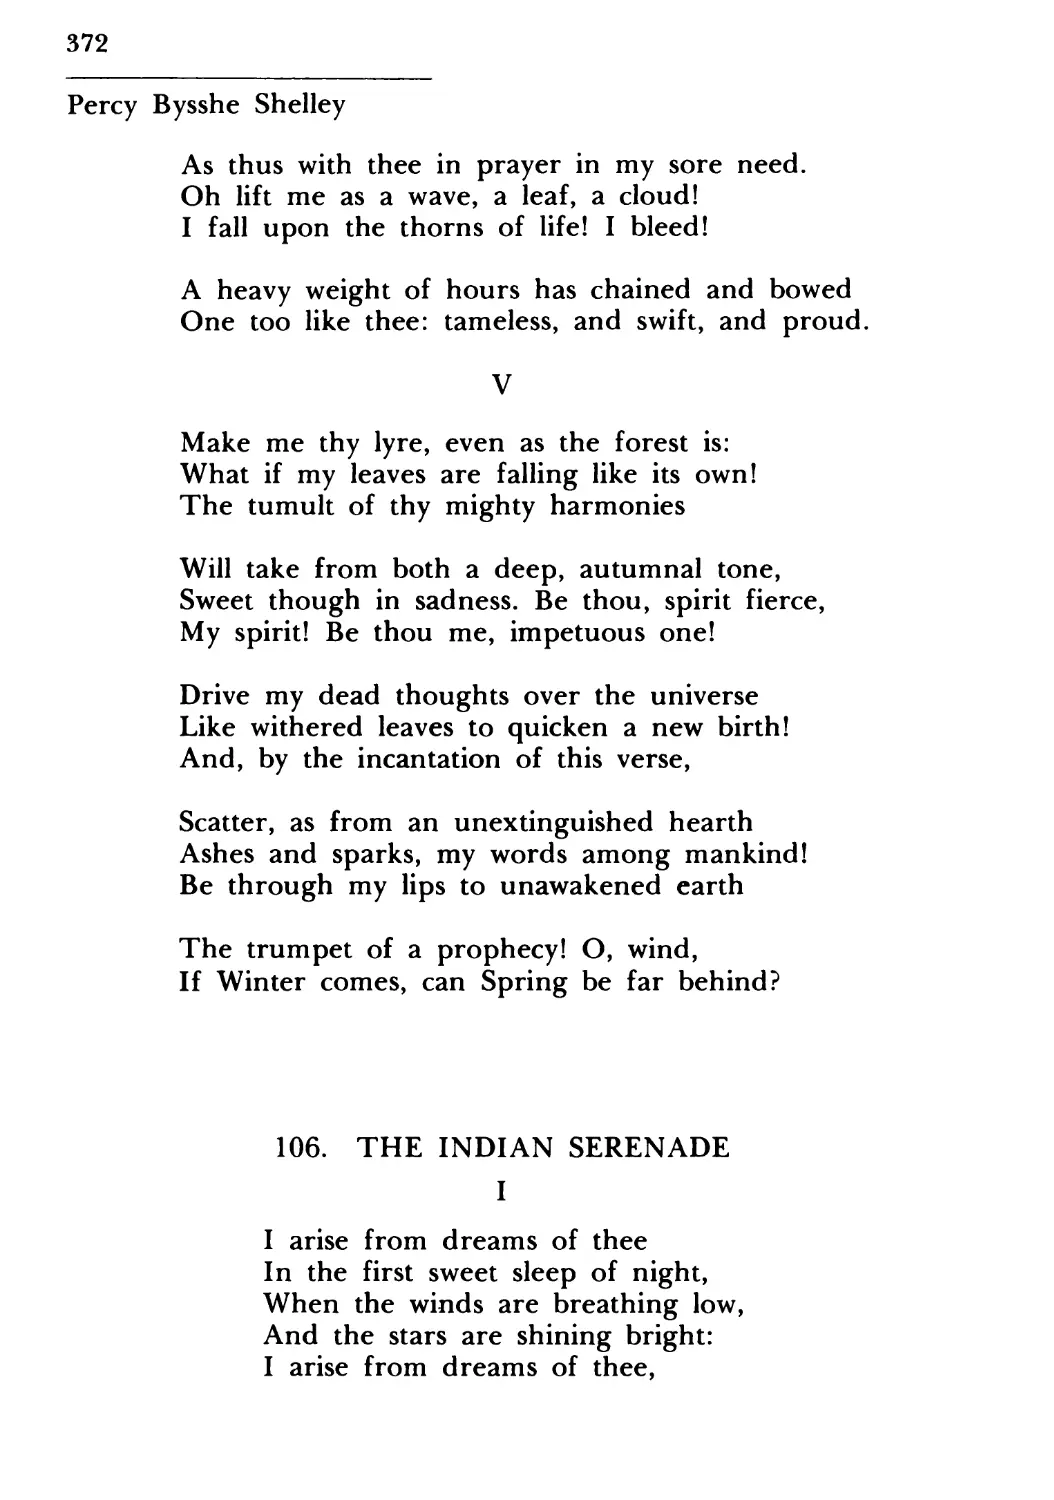 106. The Indian Serenade